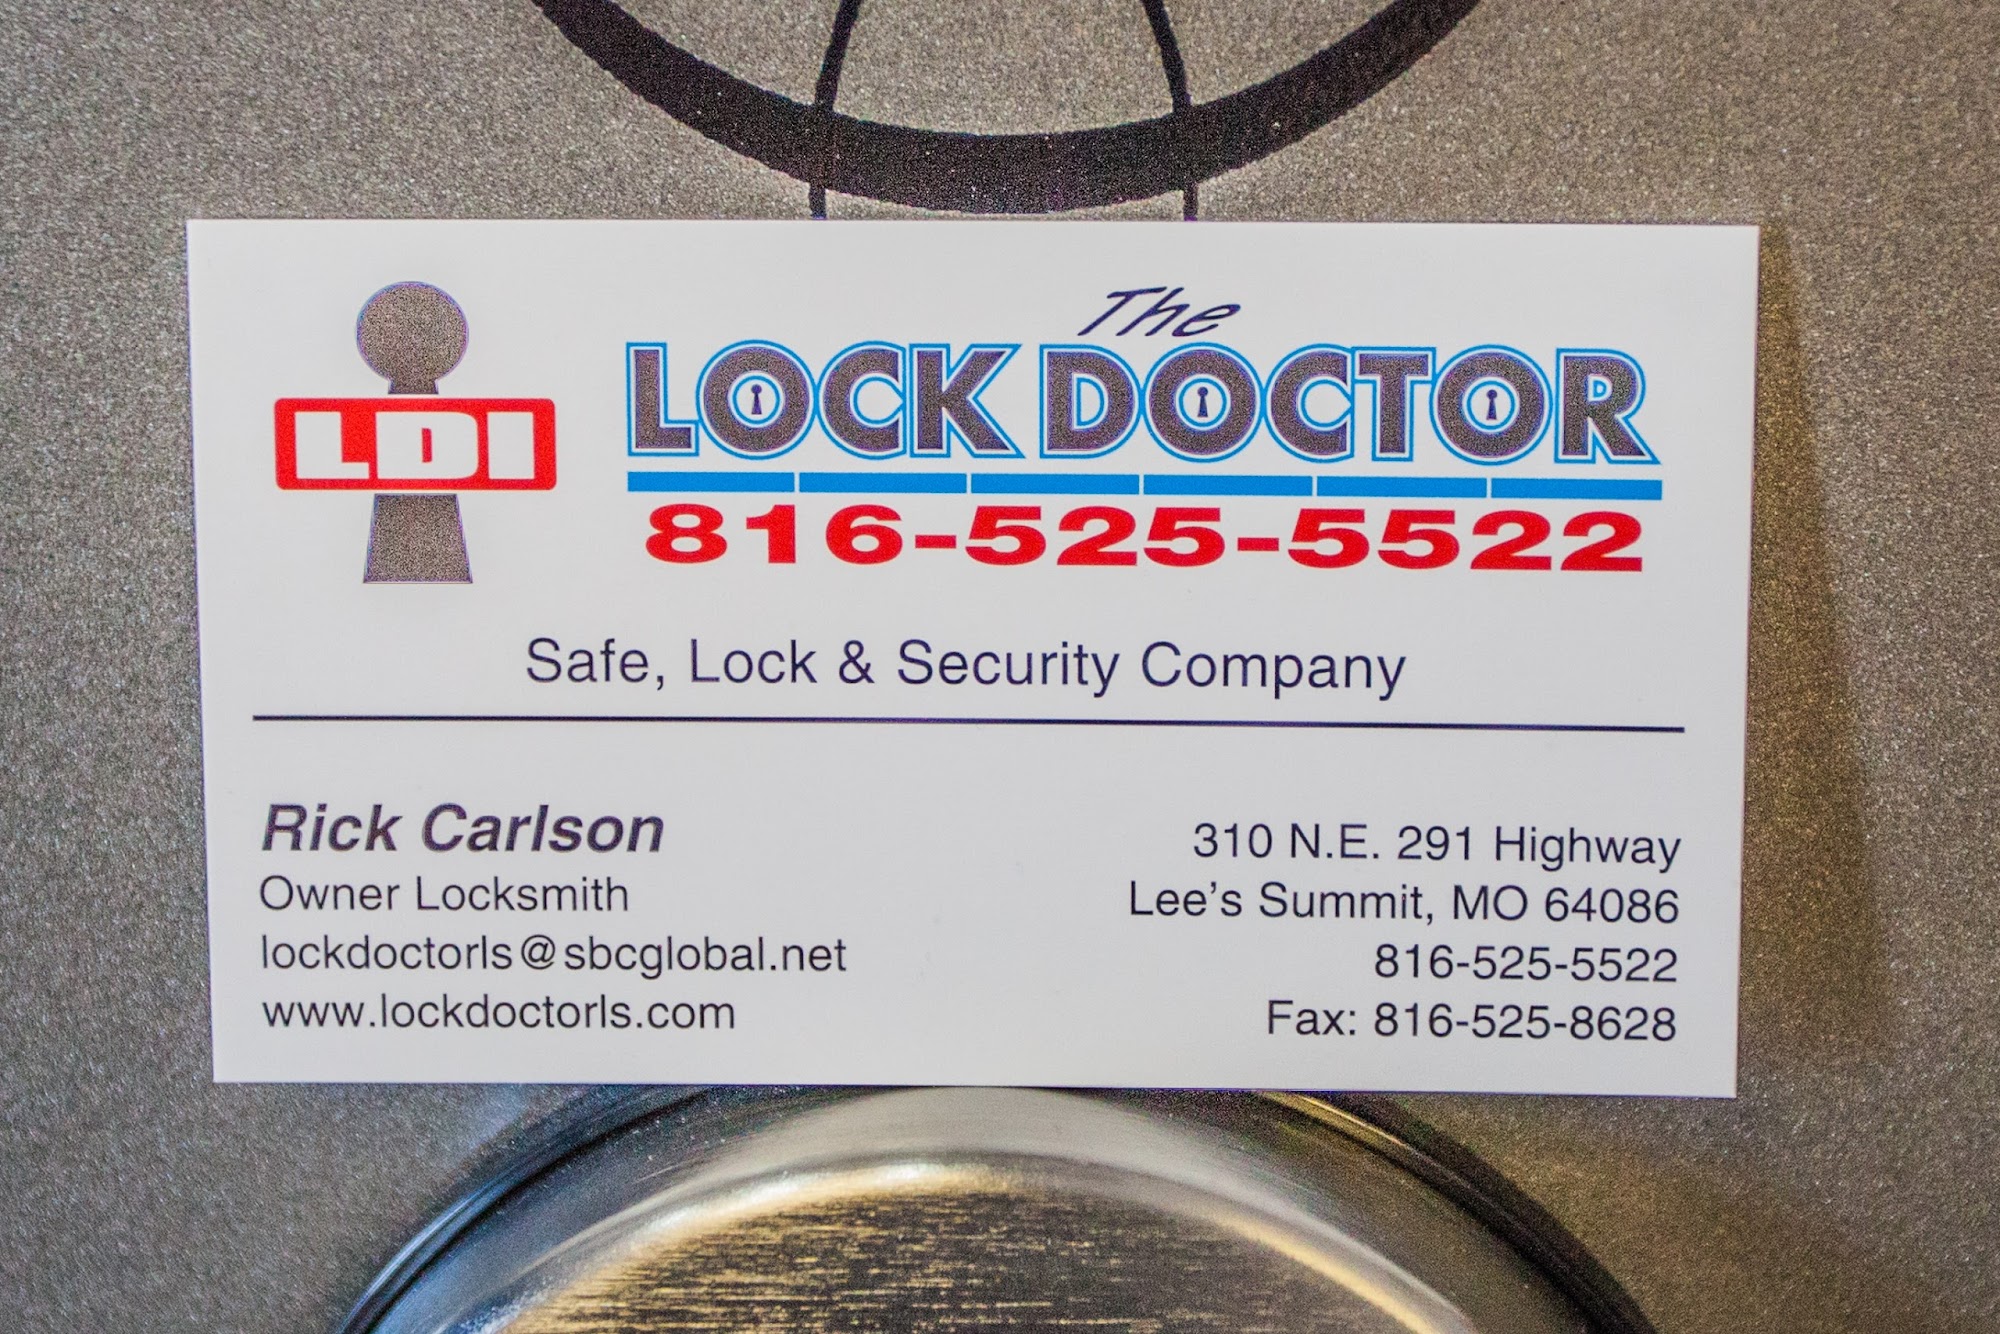 The Lock Doctor, Inc.